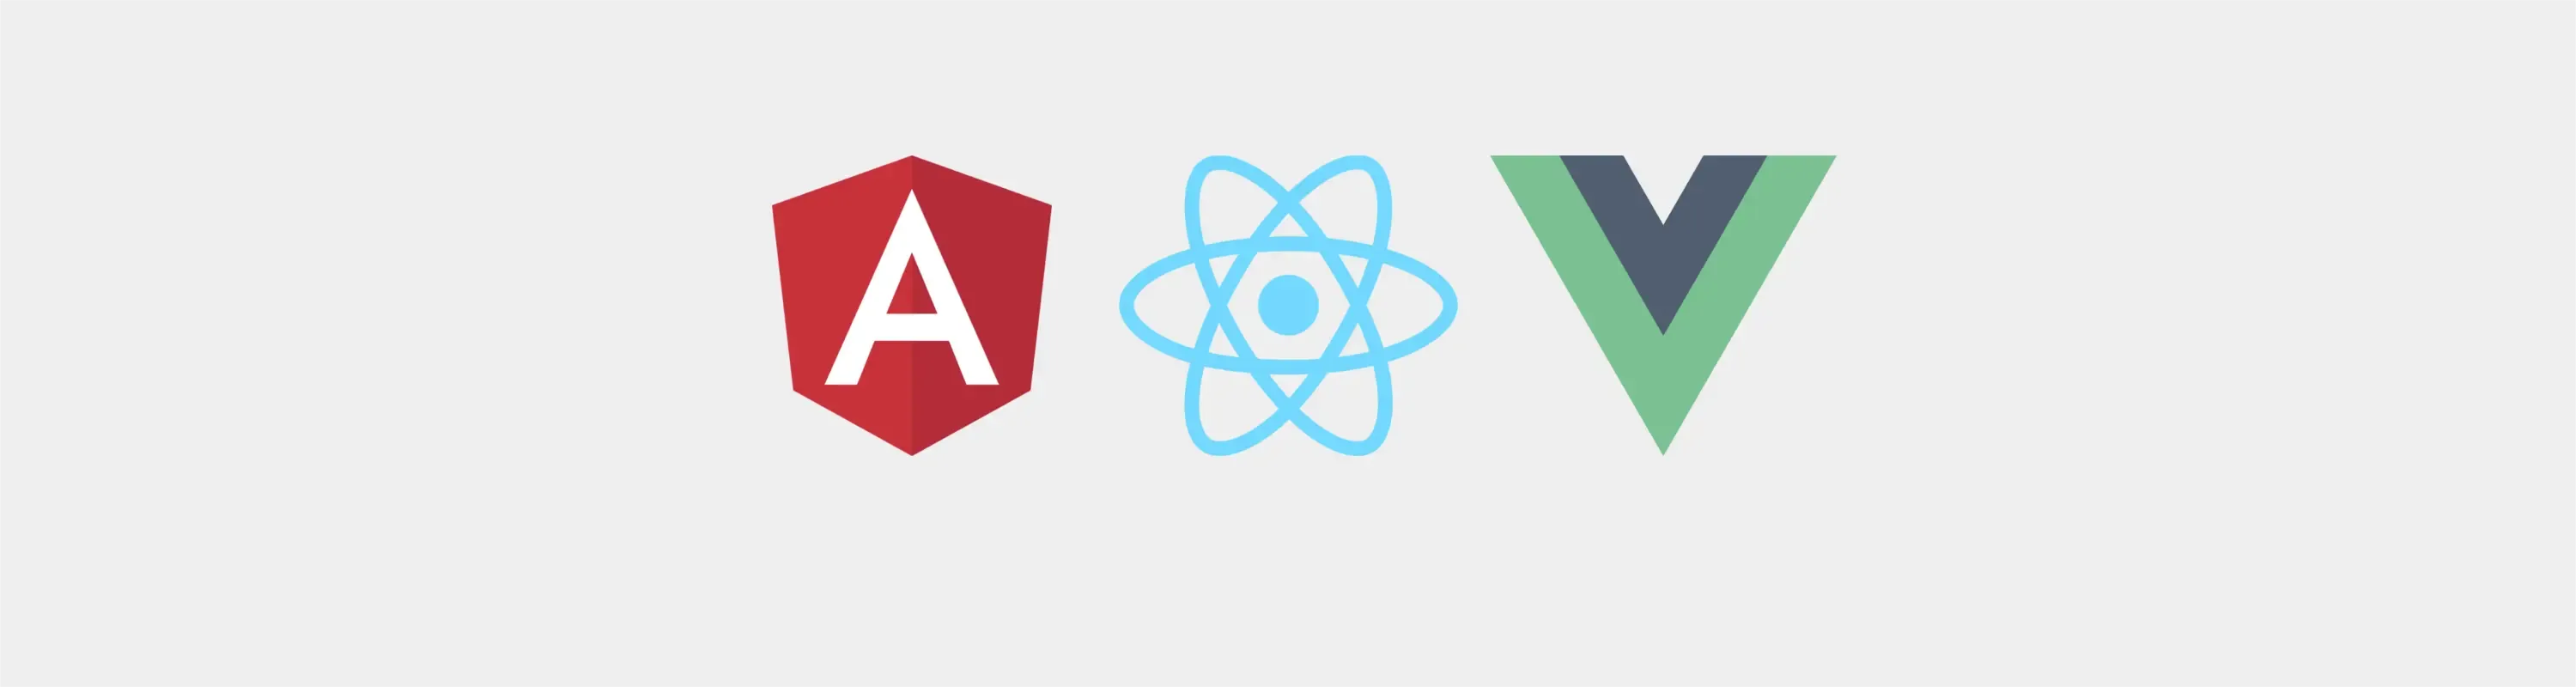 angular react and vue logos